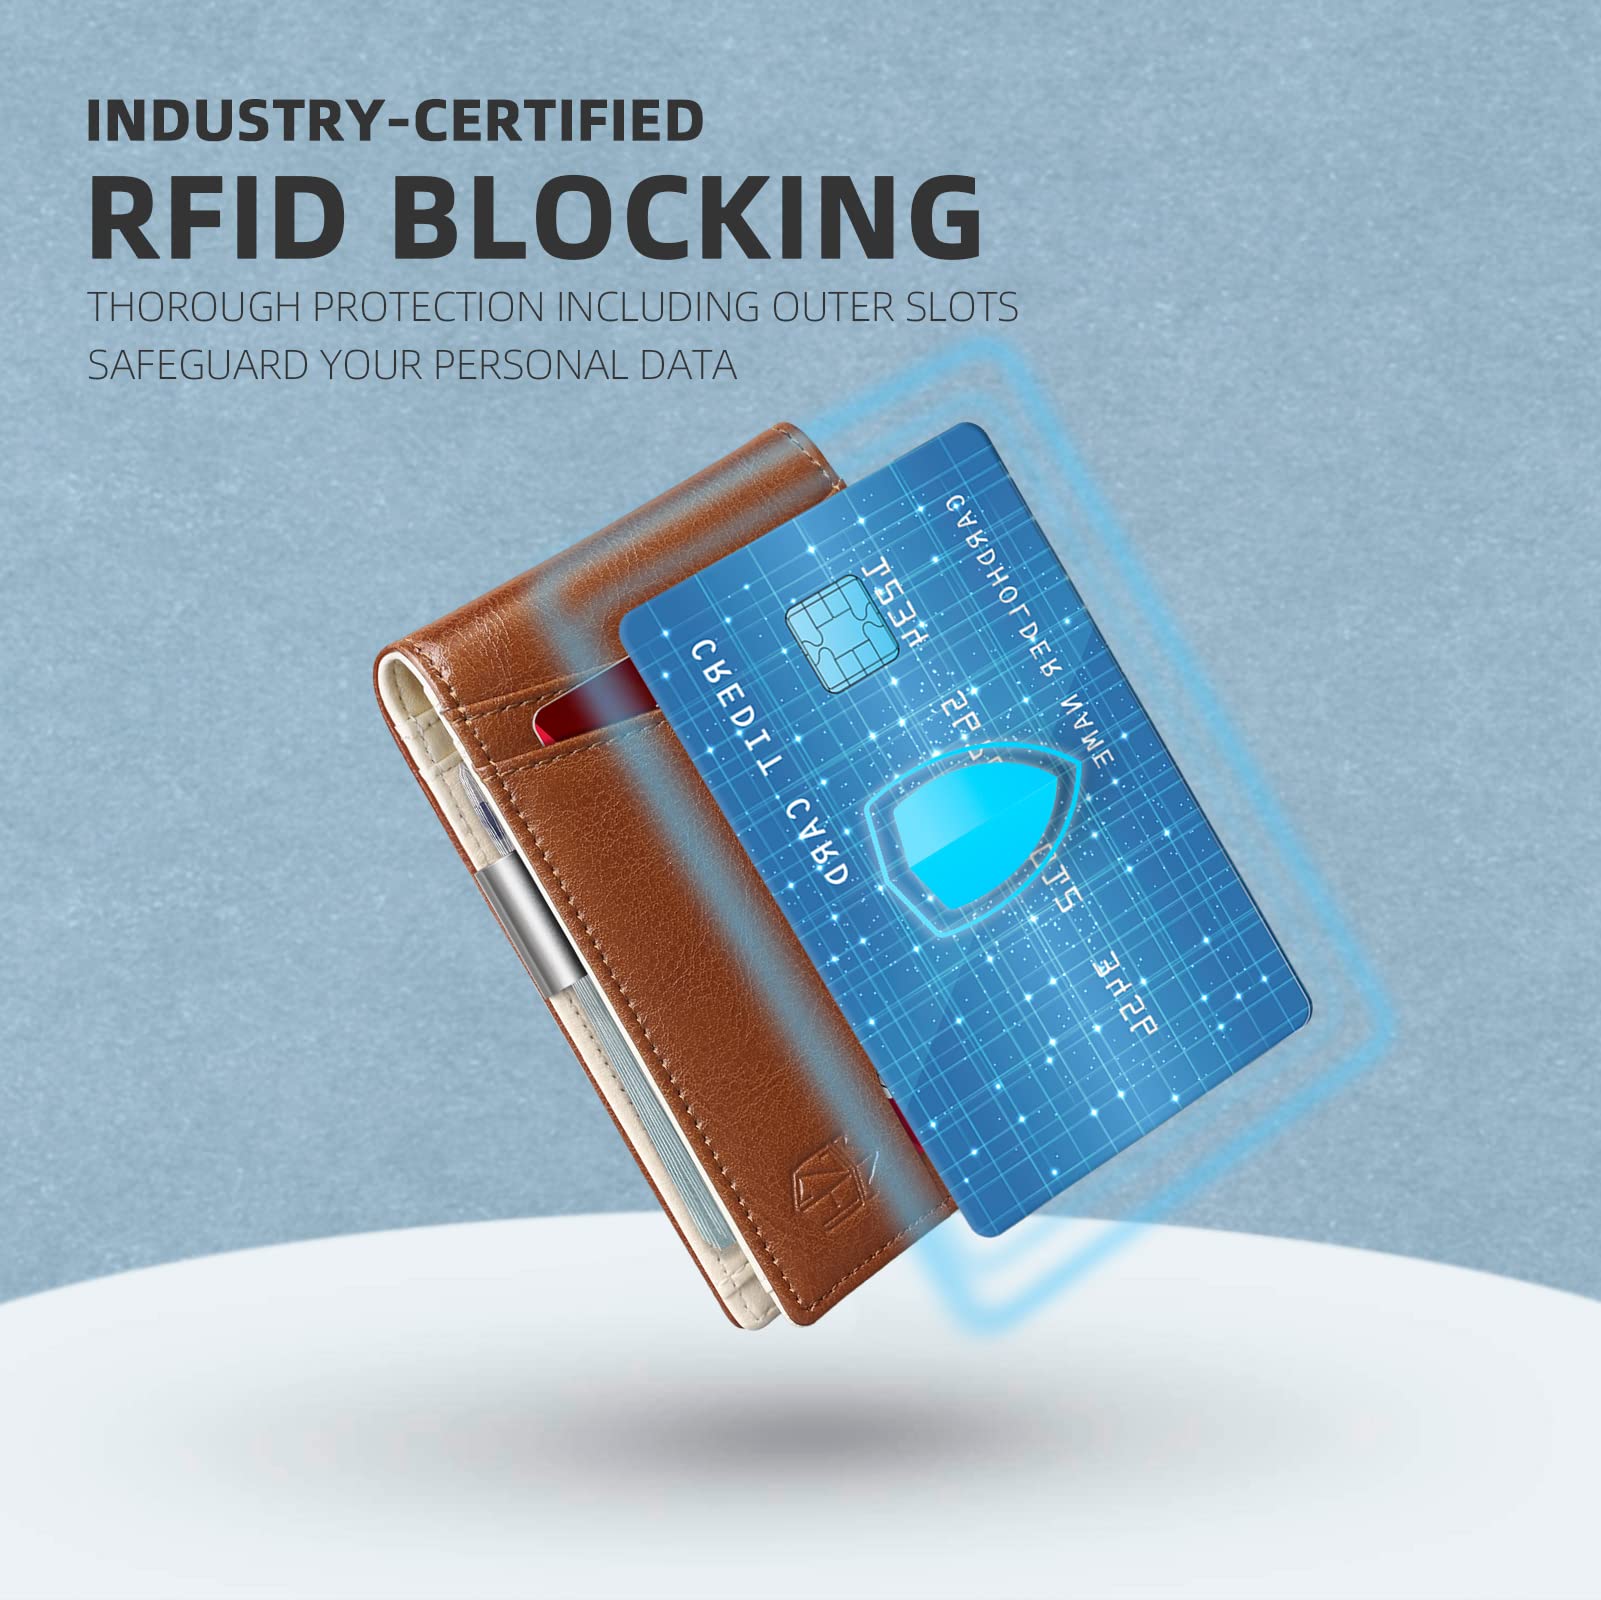 Zitahli Slim Wallet for Men-Leather Money Clip Mens Wallets-RFID Blocking Front Pocket Bifold Wallet-Minimalist Credit Card Holder with Gift Box